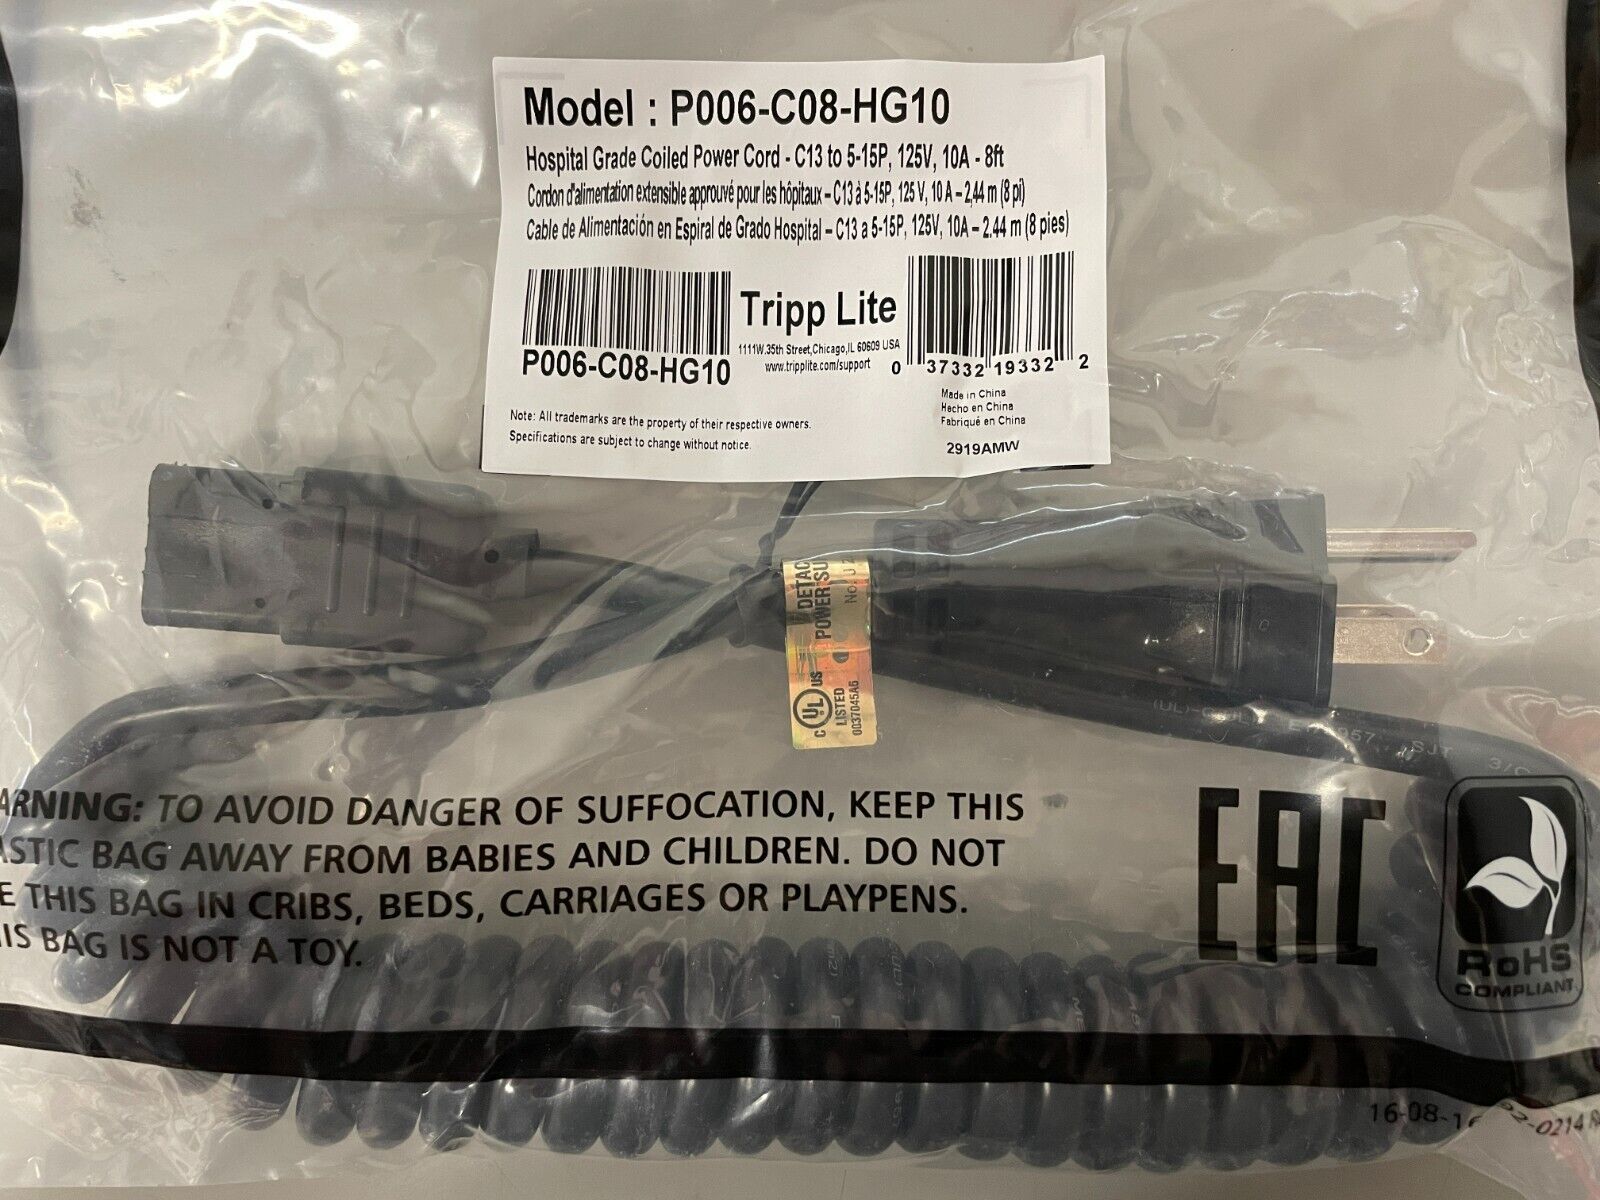 Tripp Lite - P006-C08-HG10 - Hospital Grade Power Cord - 8 ft. - $34.95